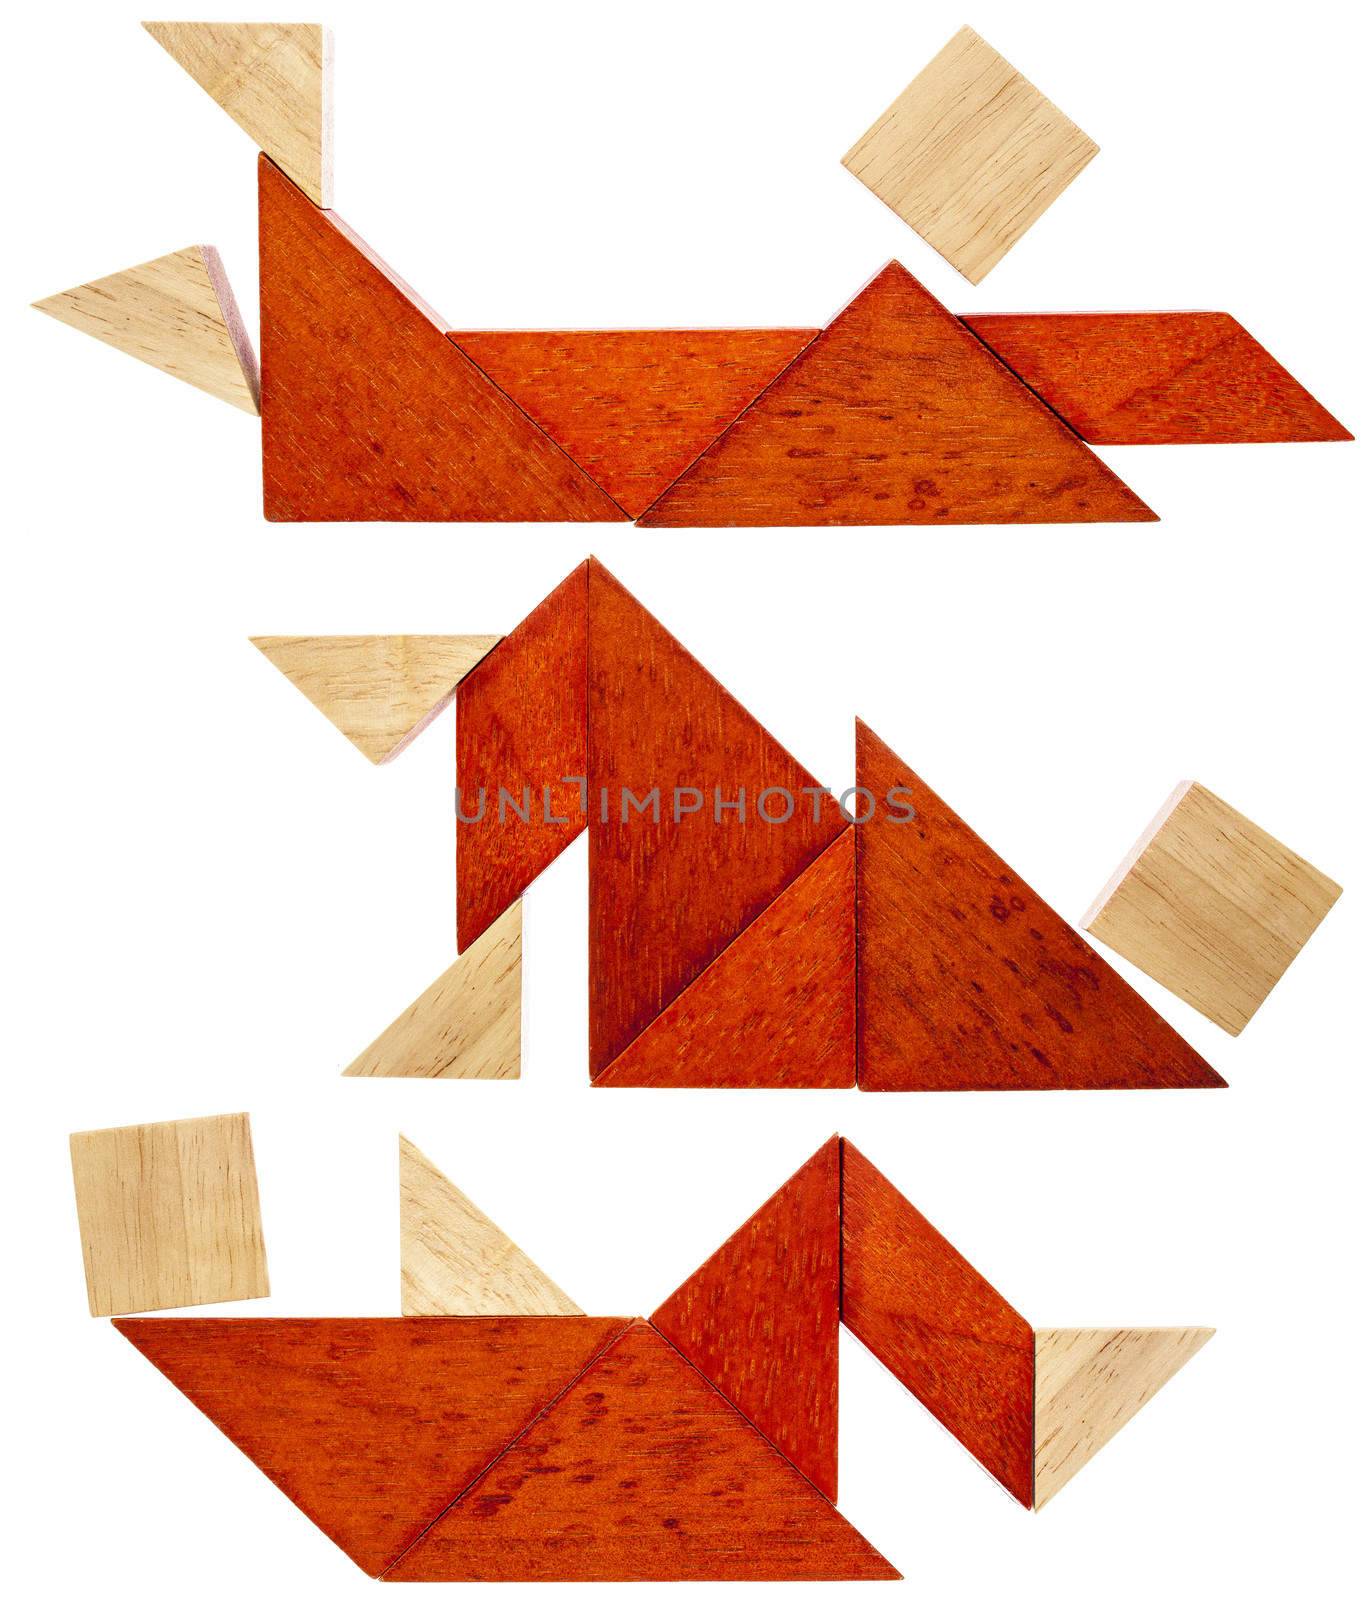 tangram resting figures by PixelsAway